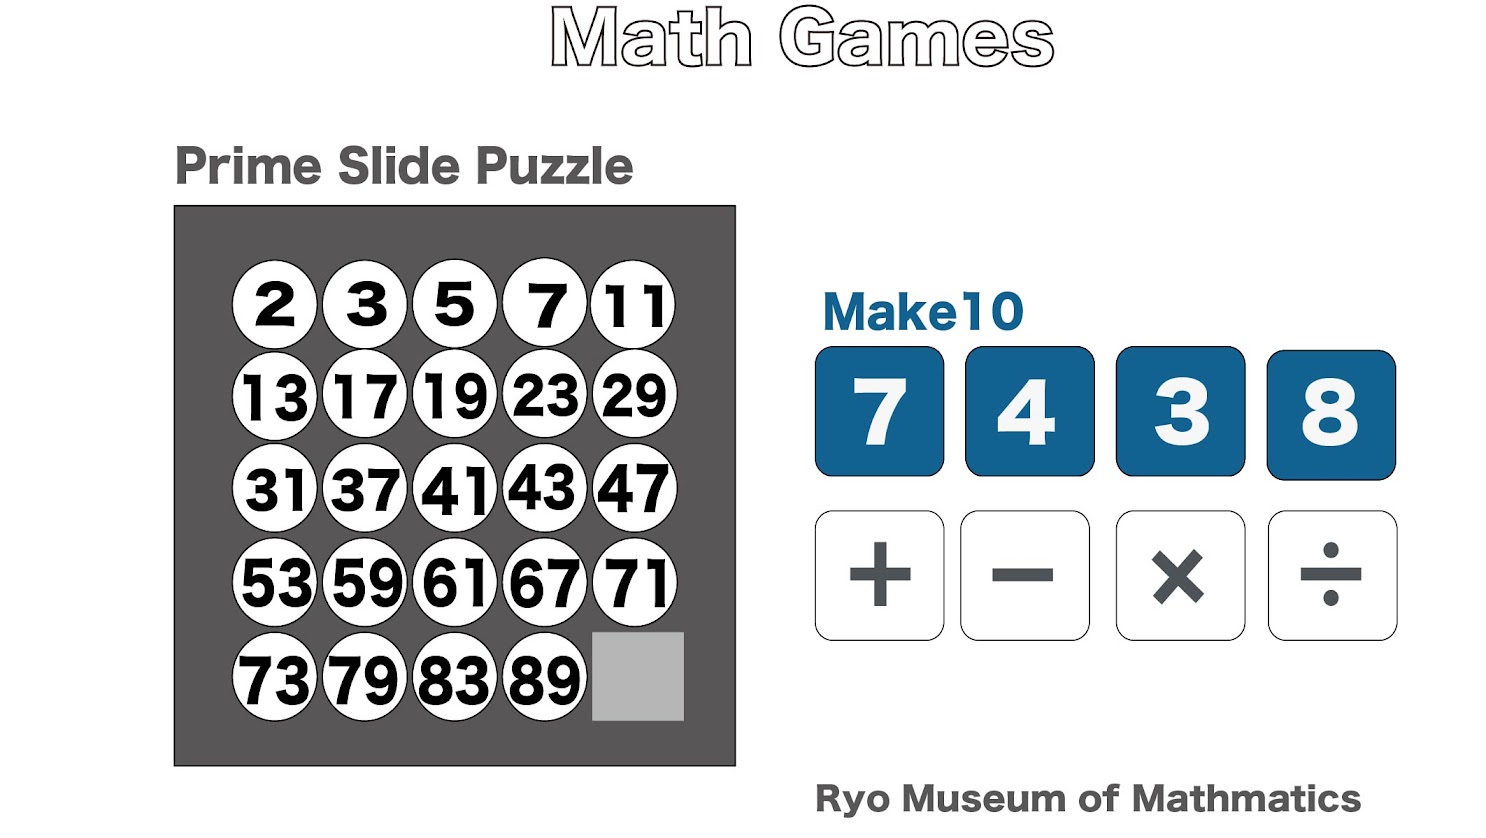 Ryo Museum of Mathmatics